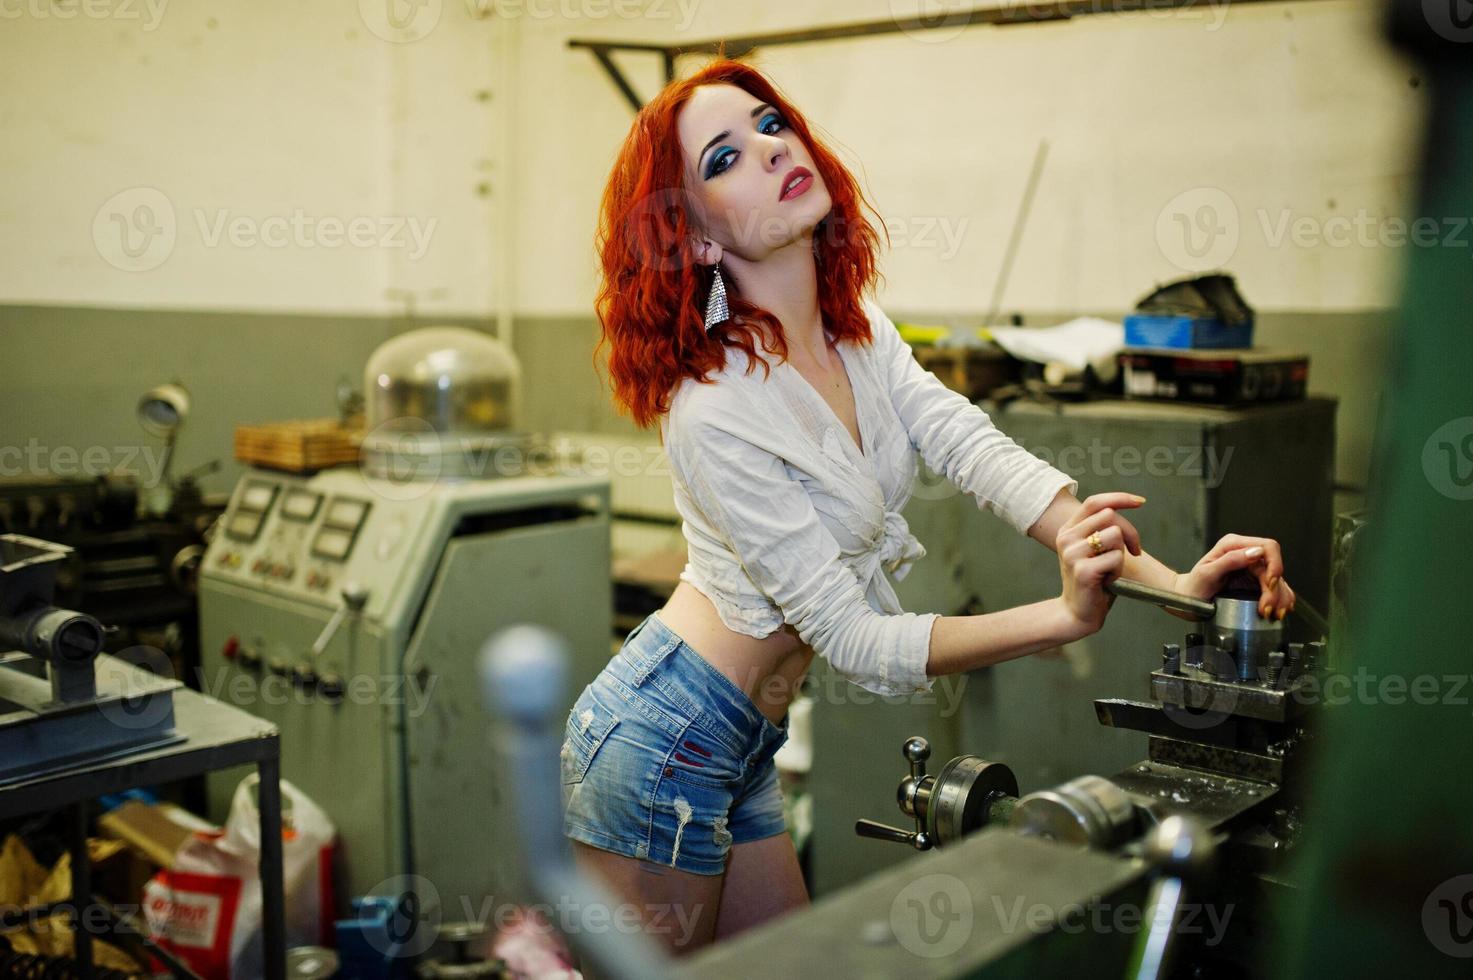 garota ruiva usa shorts jeans curtos e blusa branca posada na máquina industrial na fábrica. foto